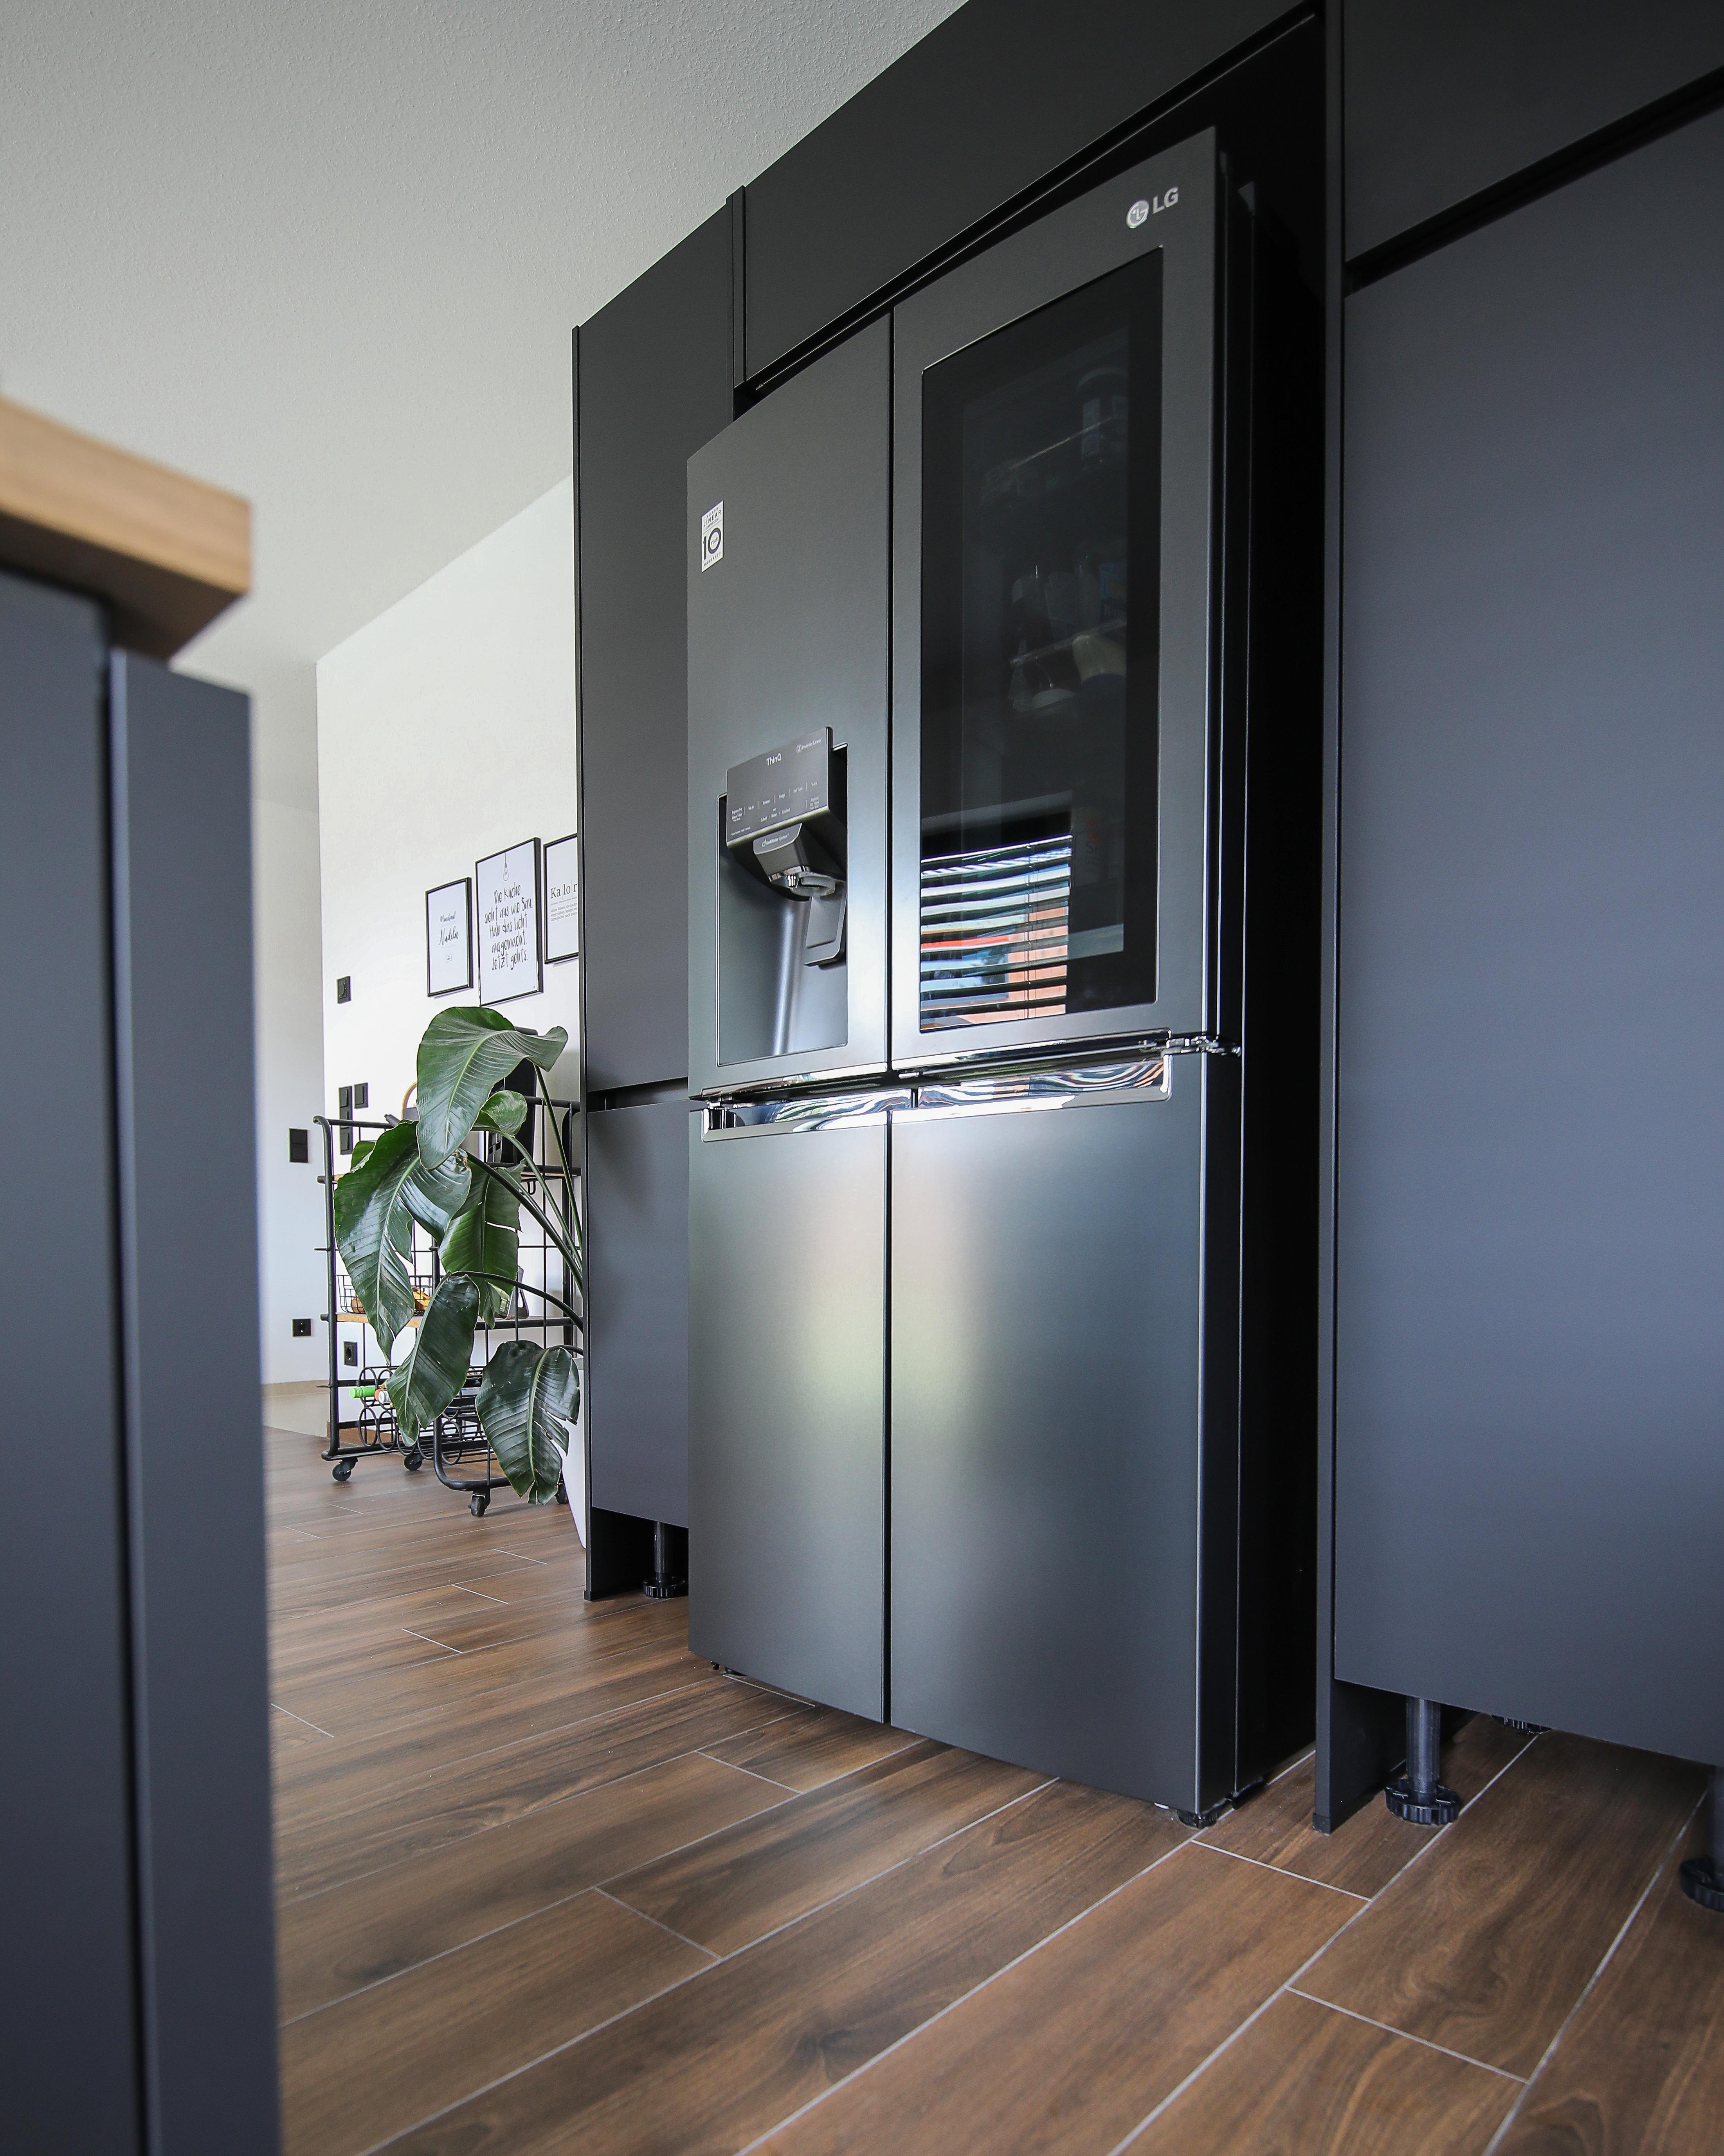 Unser Side-By-Side Kühlschrank #küche #schwarzeküche #kücheninspiration #kücheninspo #kühlschrank